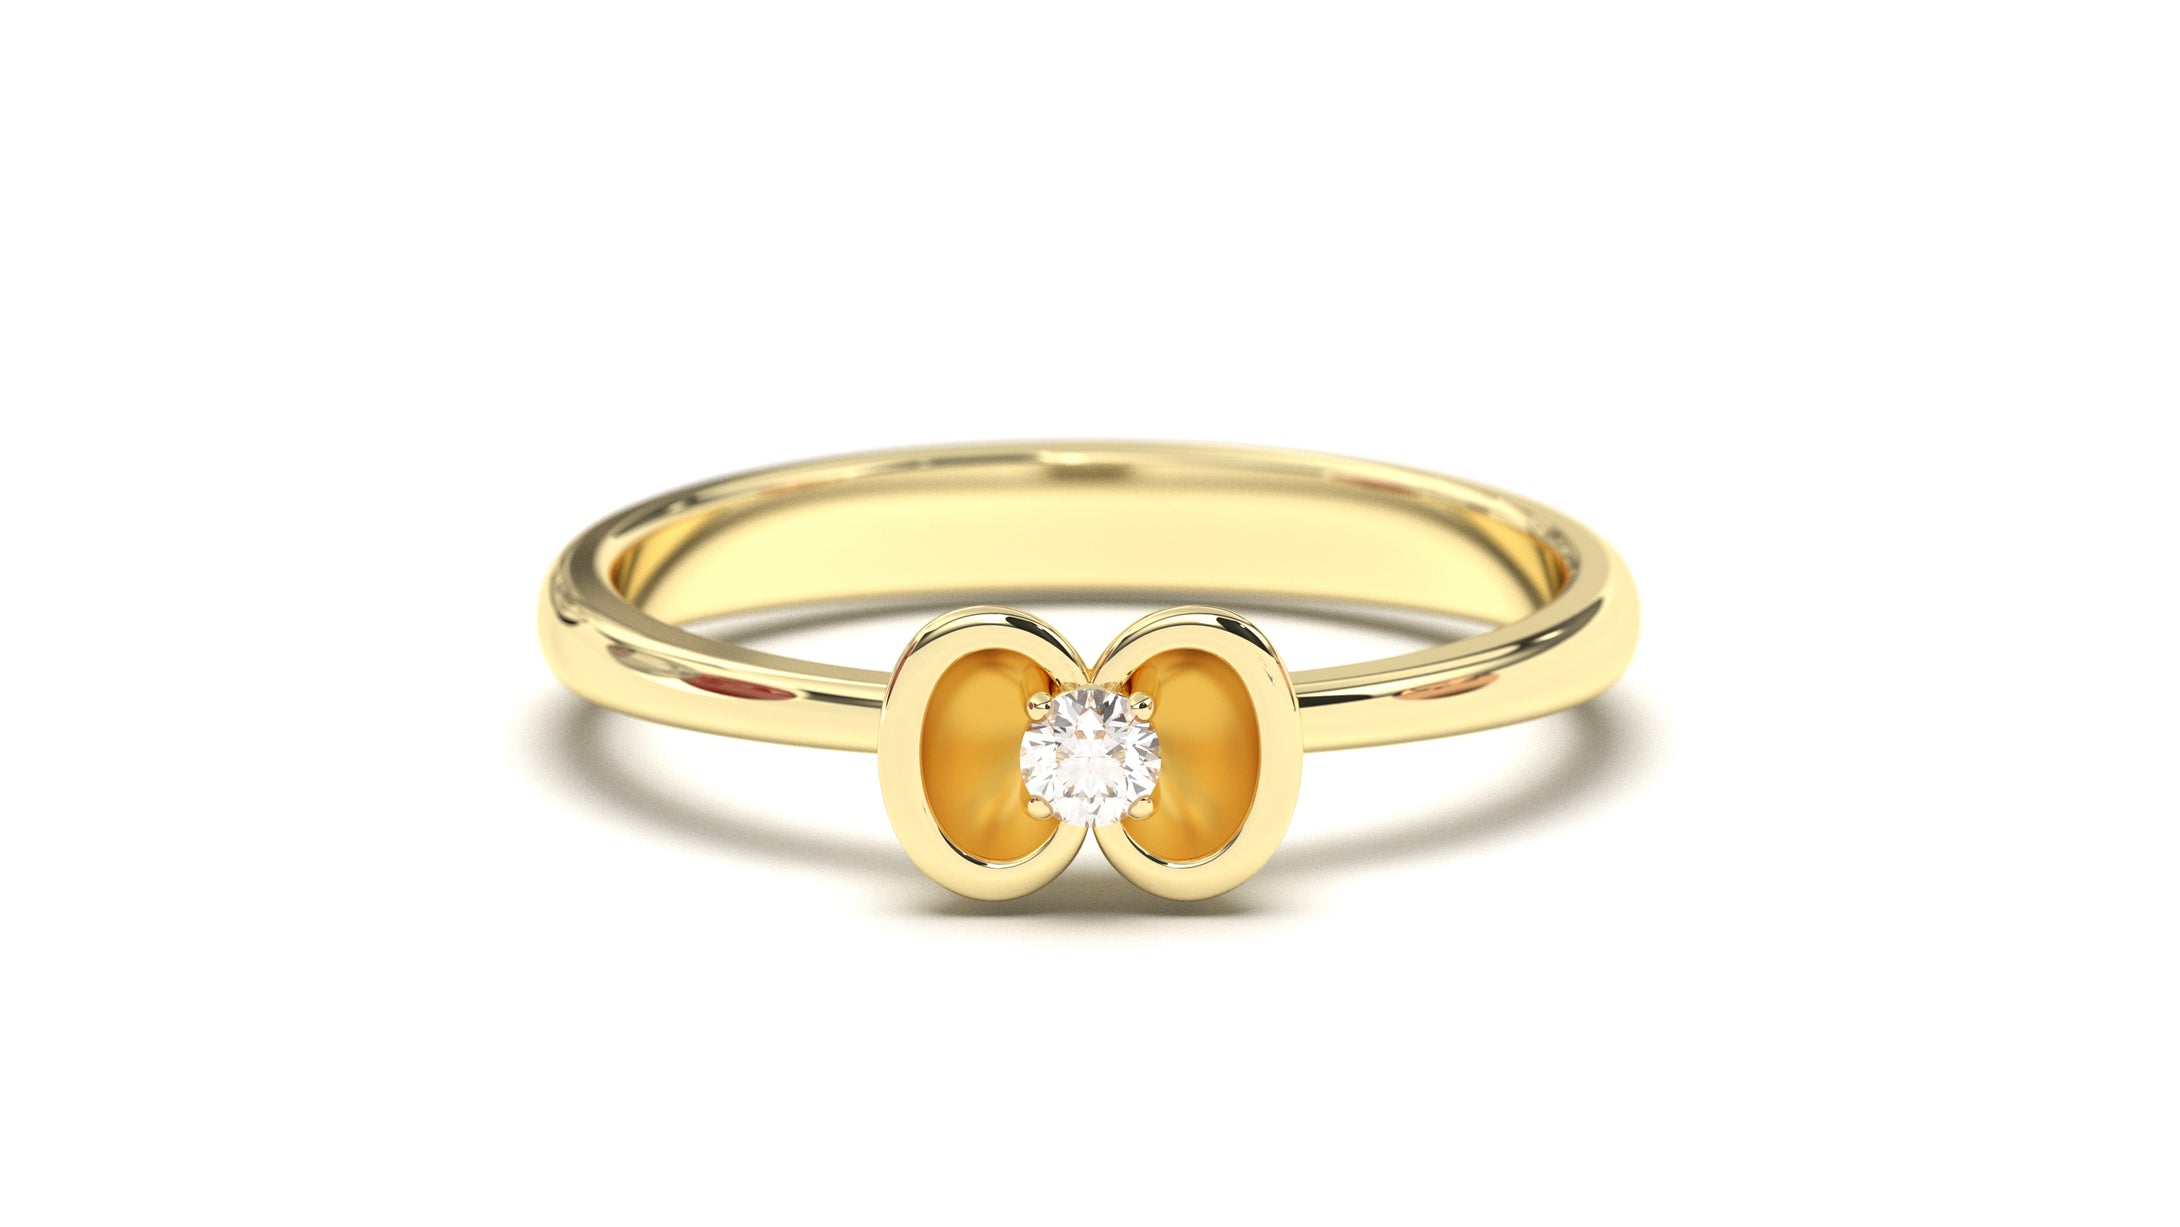 Flower Theme Ring with a Single Round White Diamond | Bloom Flora XII